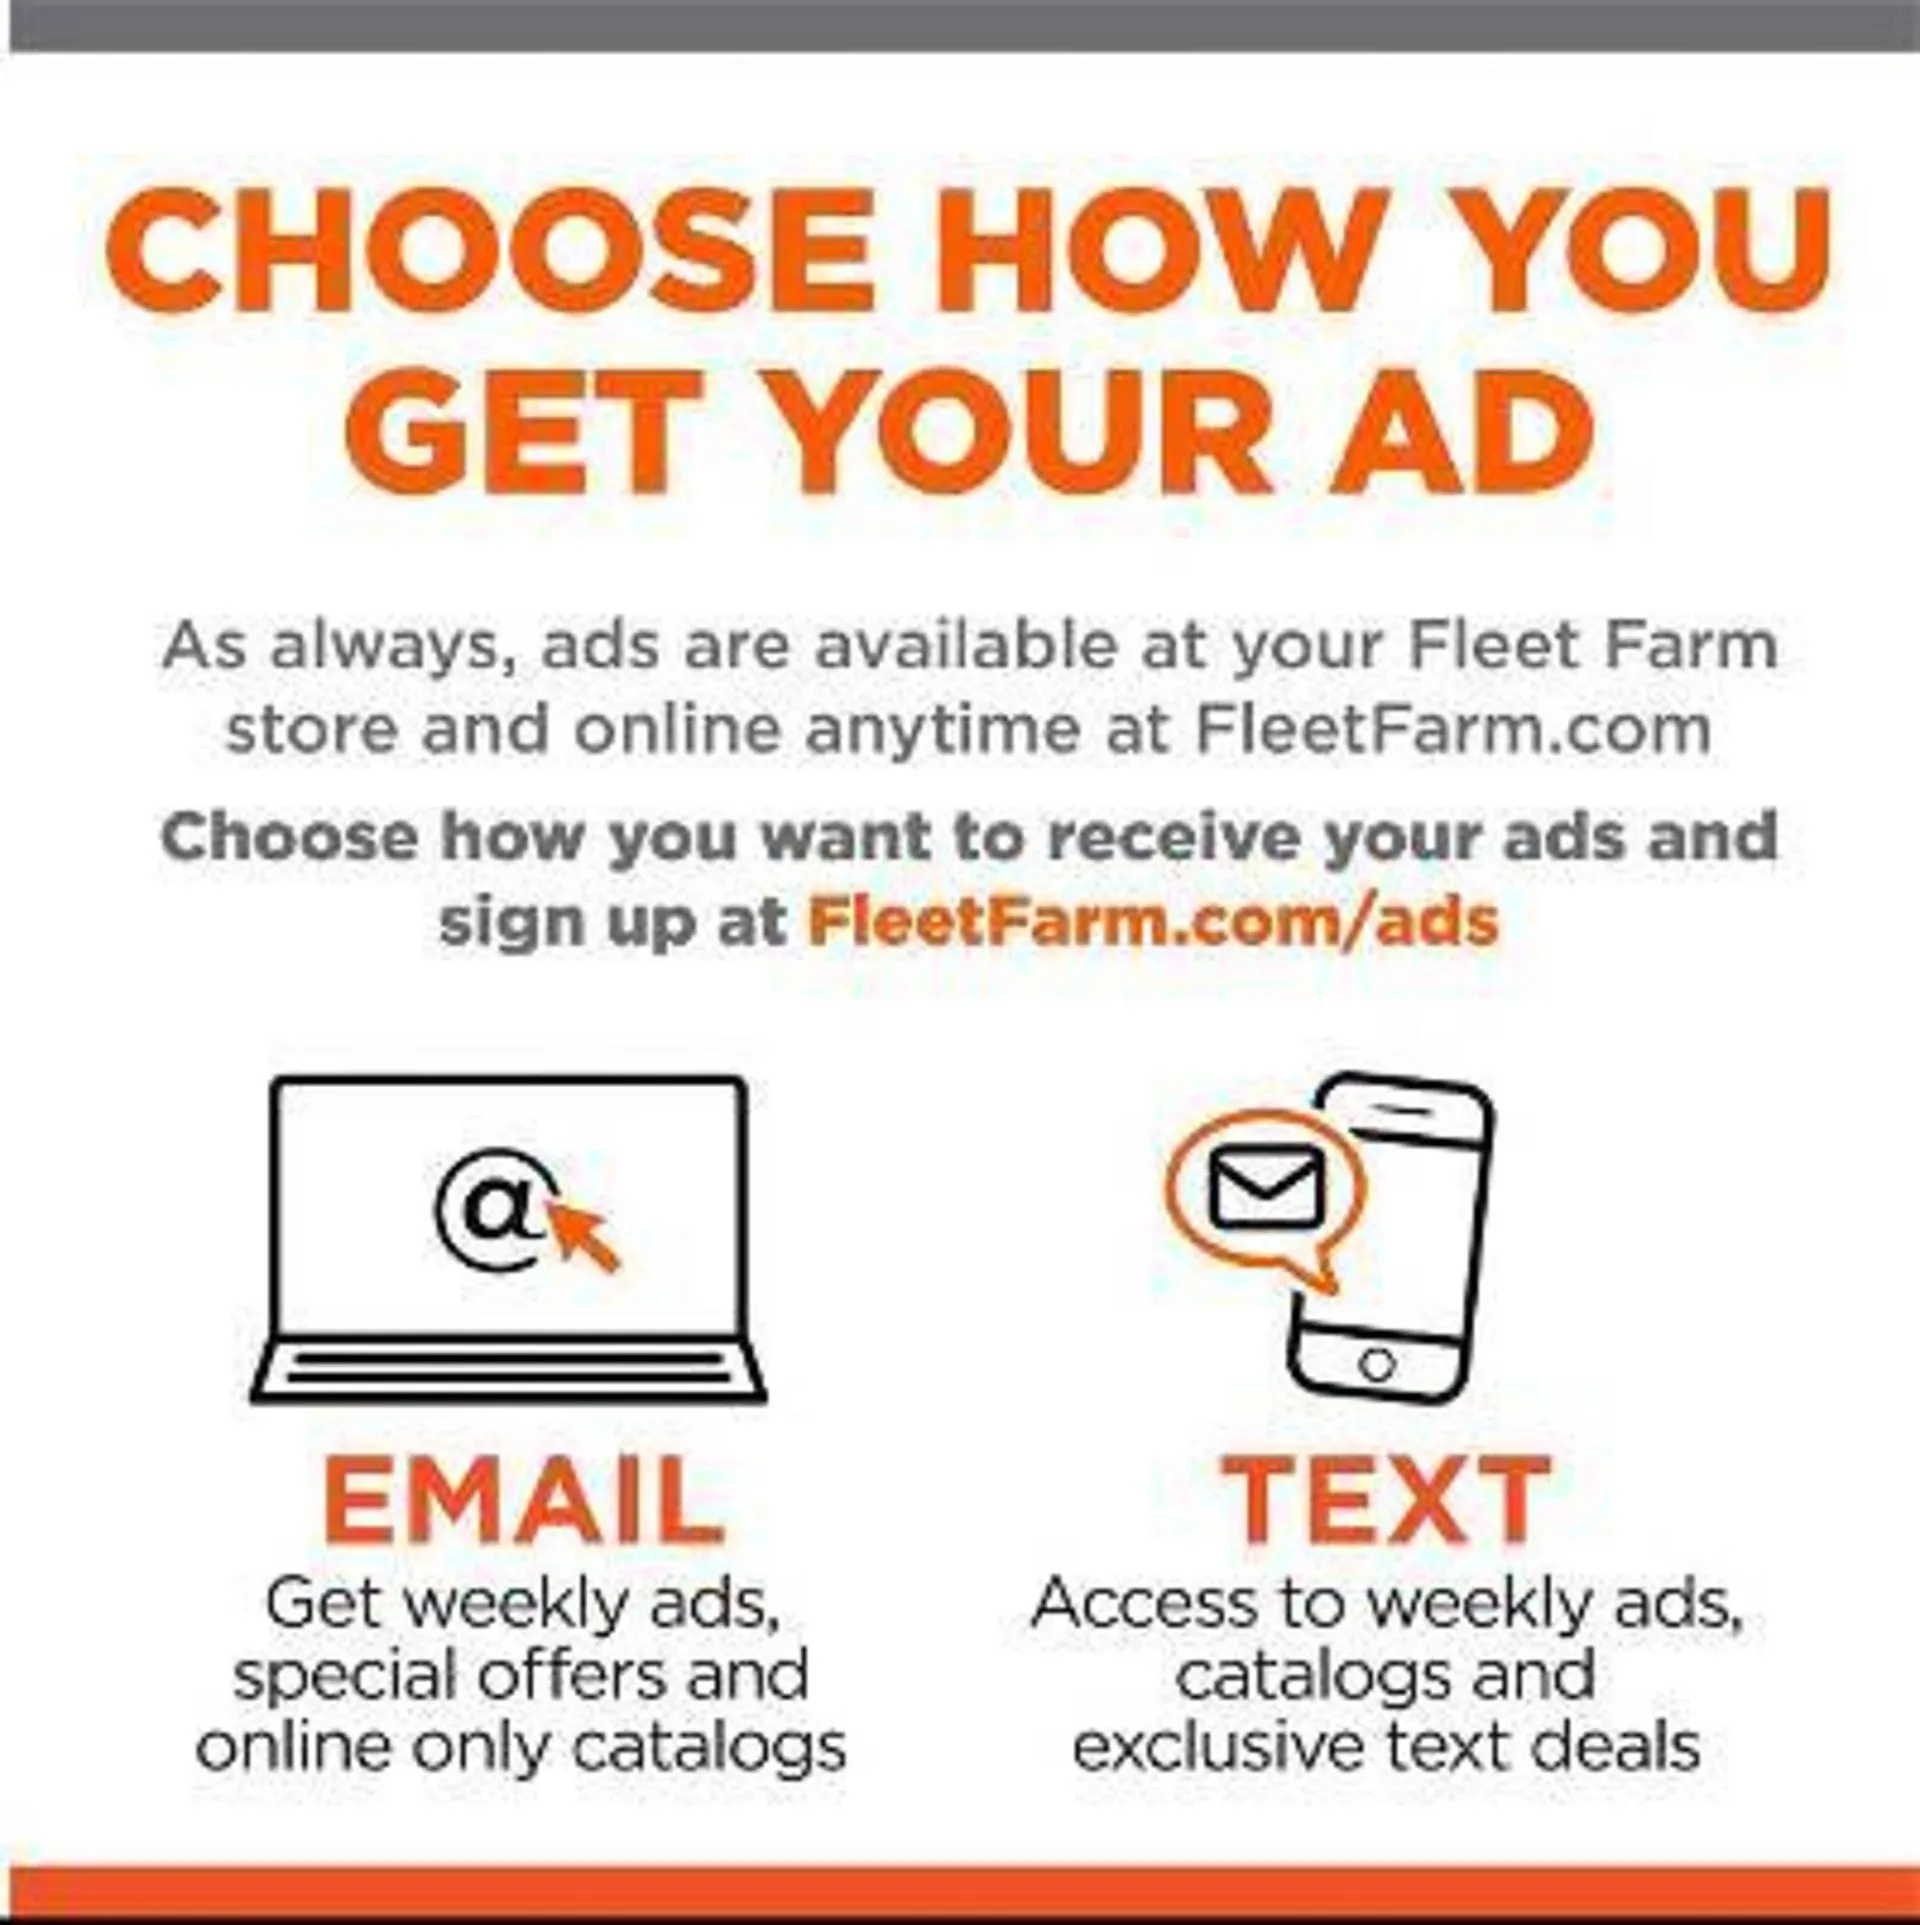 Fleet Farm ad - 5